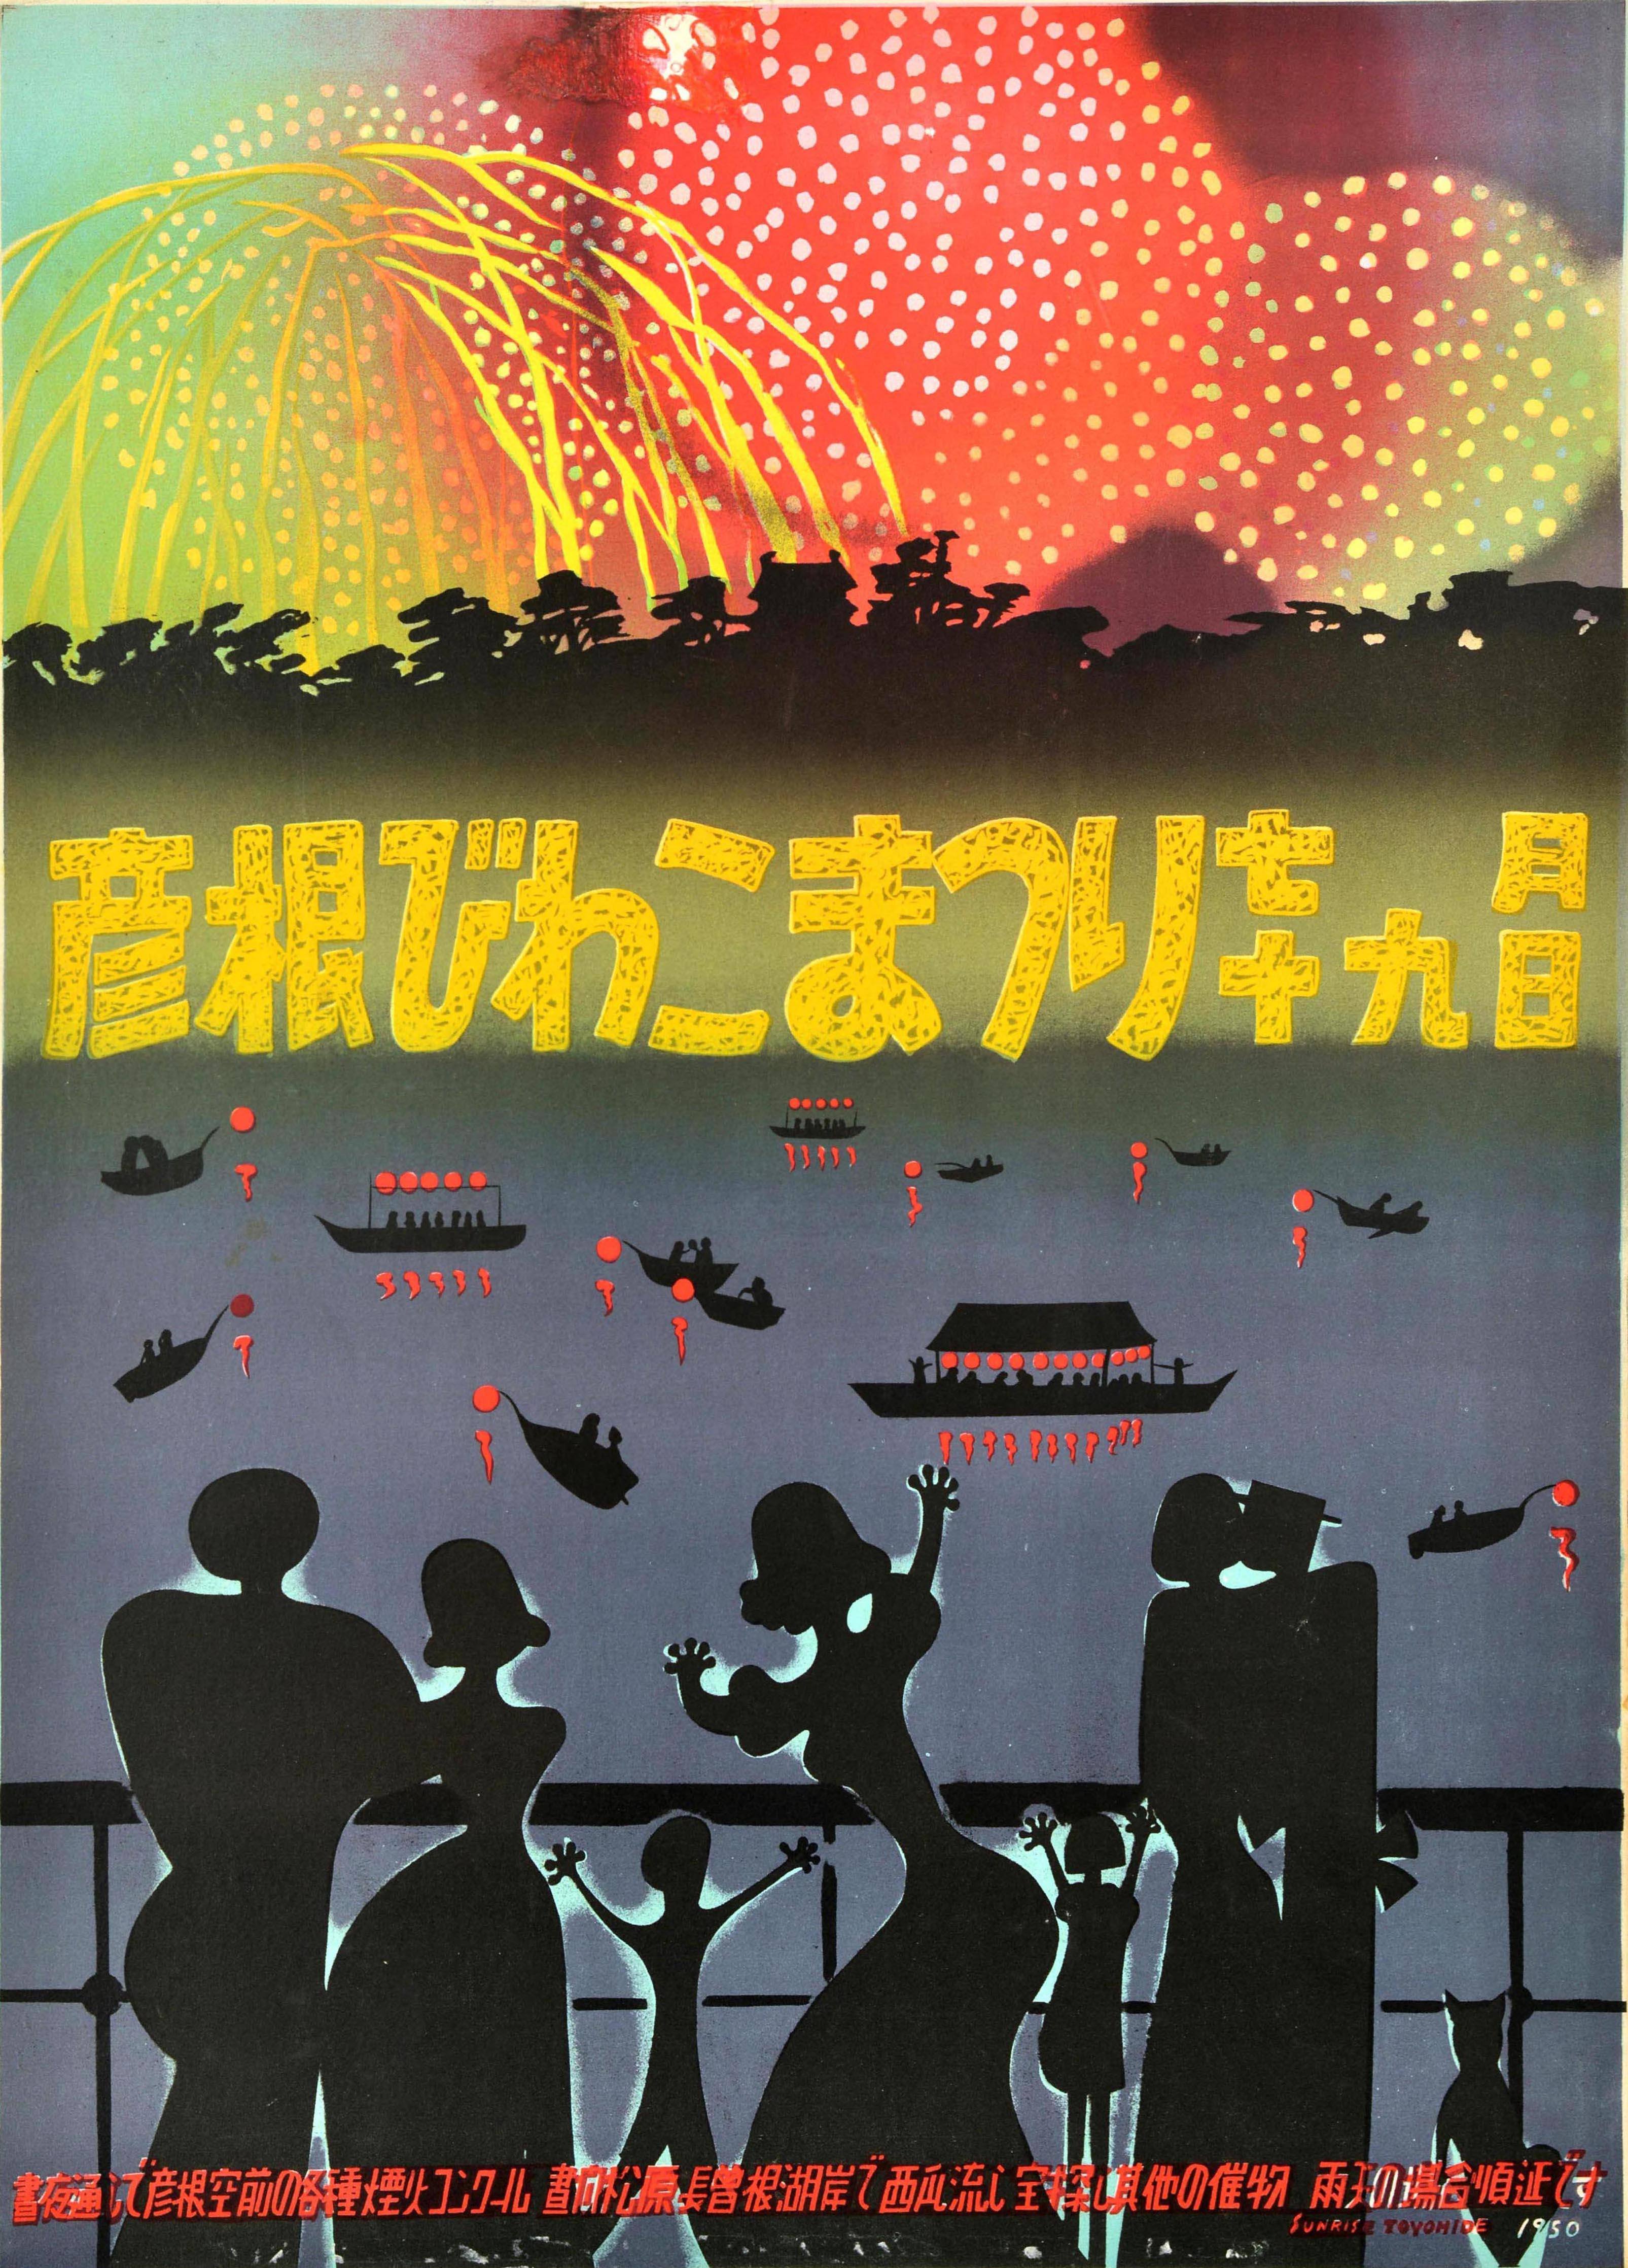 Unknown Print - Original Vintage Travel Poster Hikone Biwako Firework Festival Japan Lake Biwa